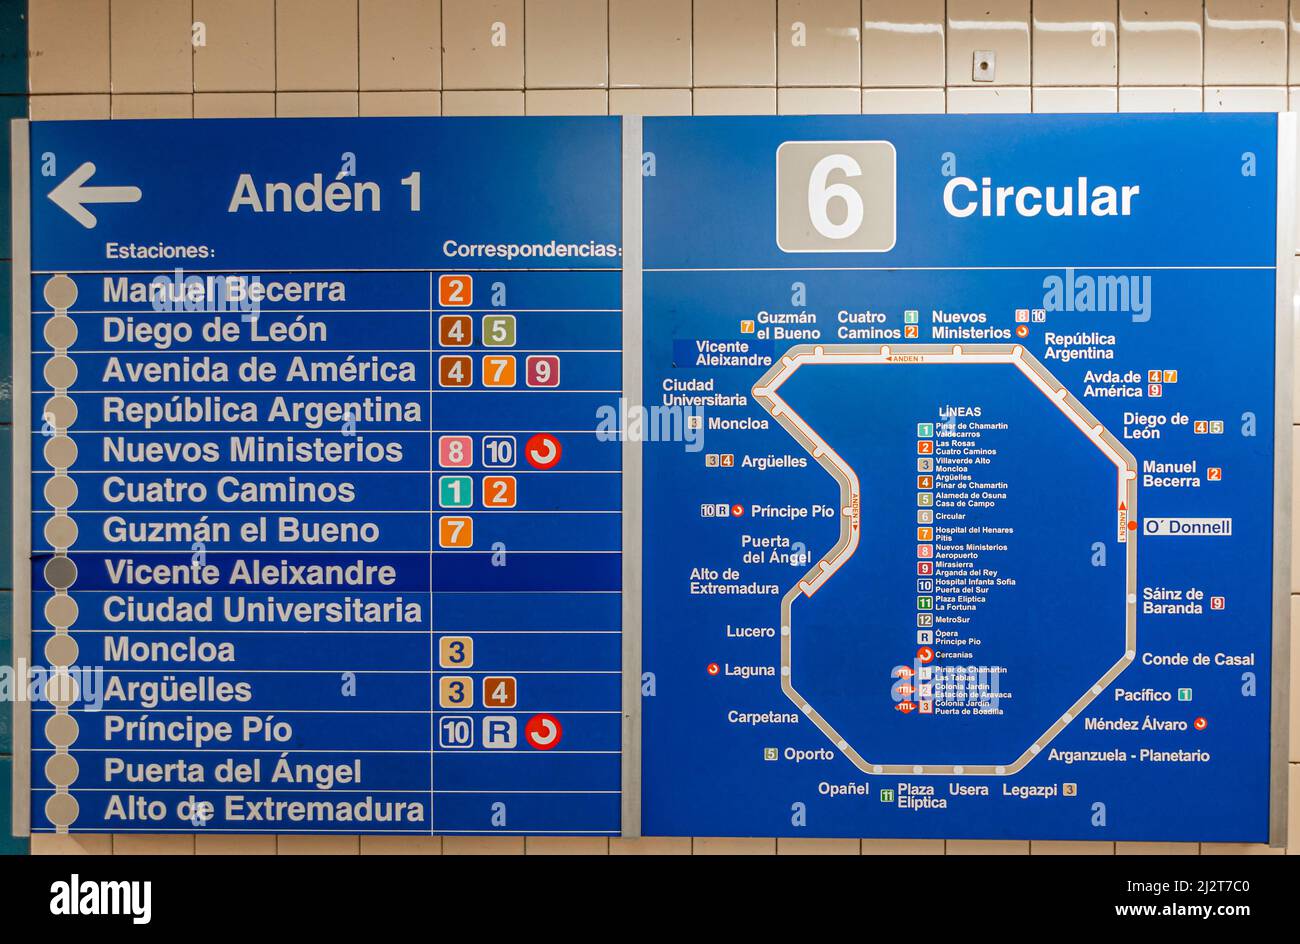 Line Circular Madrid Metro Map On The Wall Stock Photo Alamy